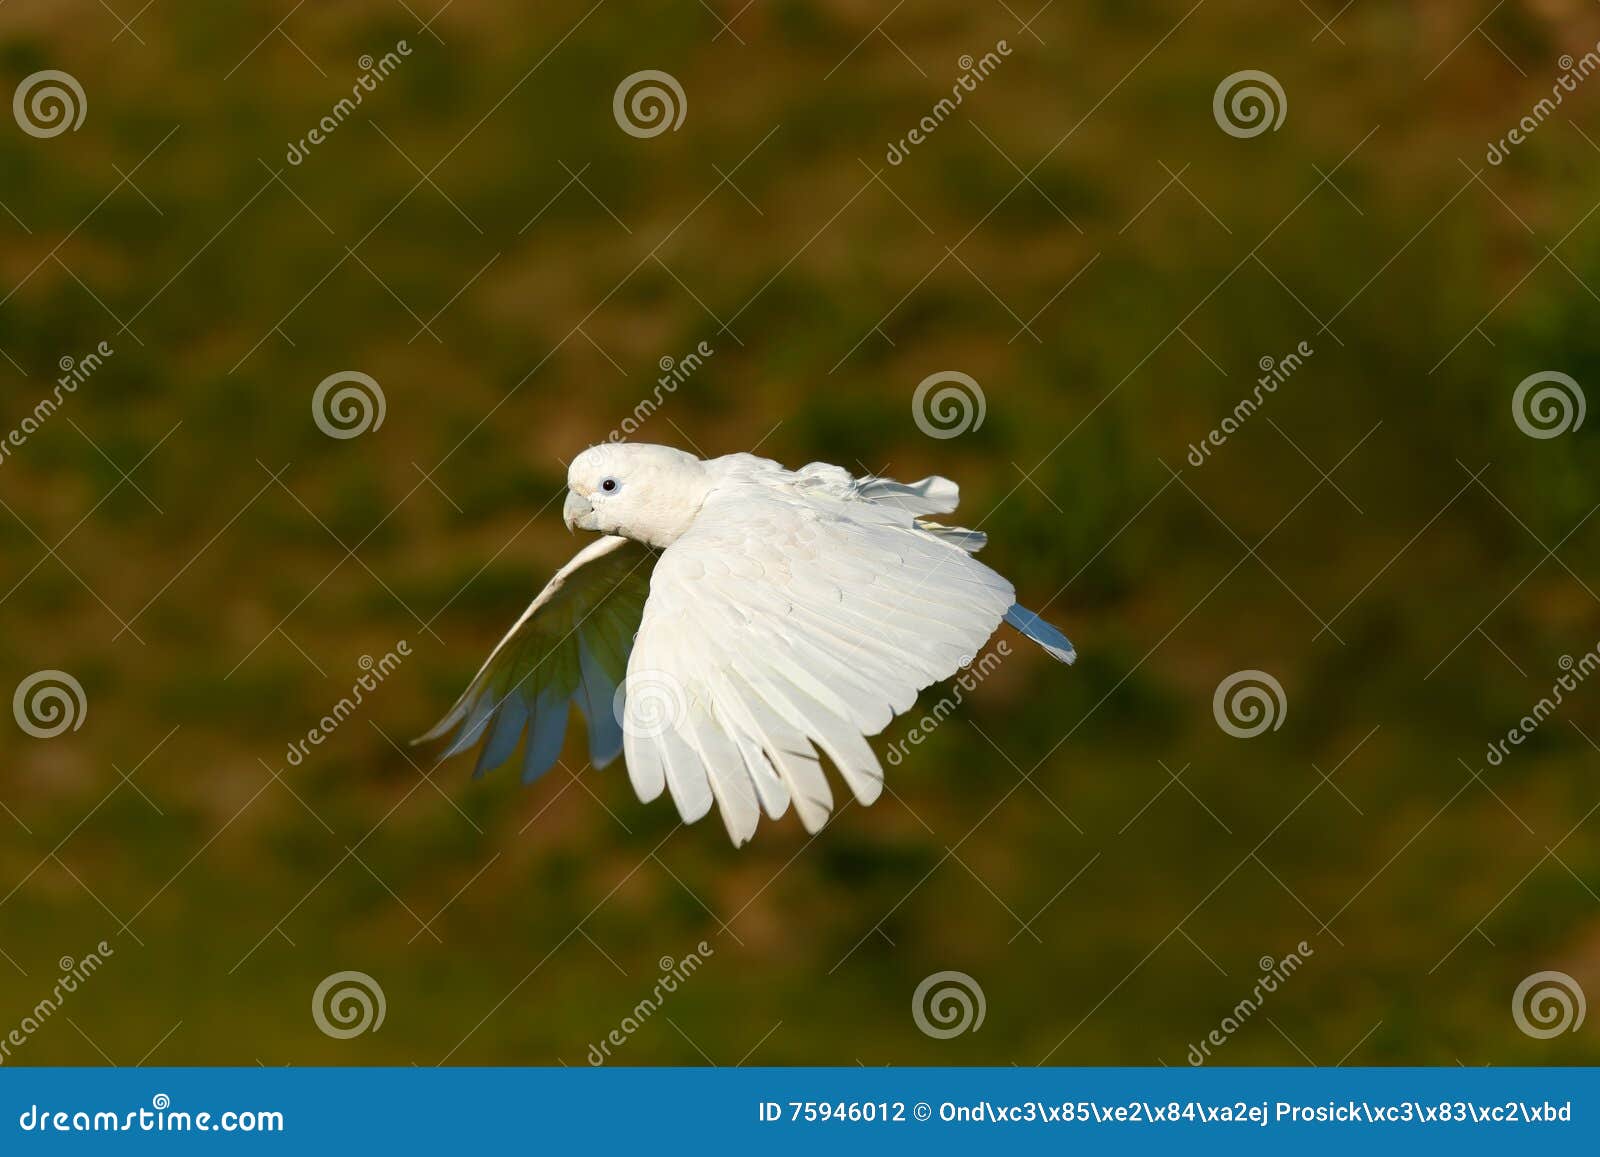 flying white parrot. solomons cockatoo, cacatua ducorpsii, flying white exotic parrot, bird in the nature habitat, action scene fr